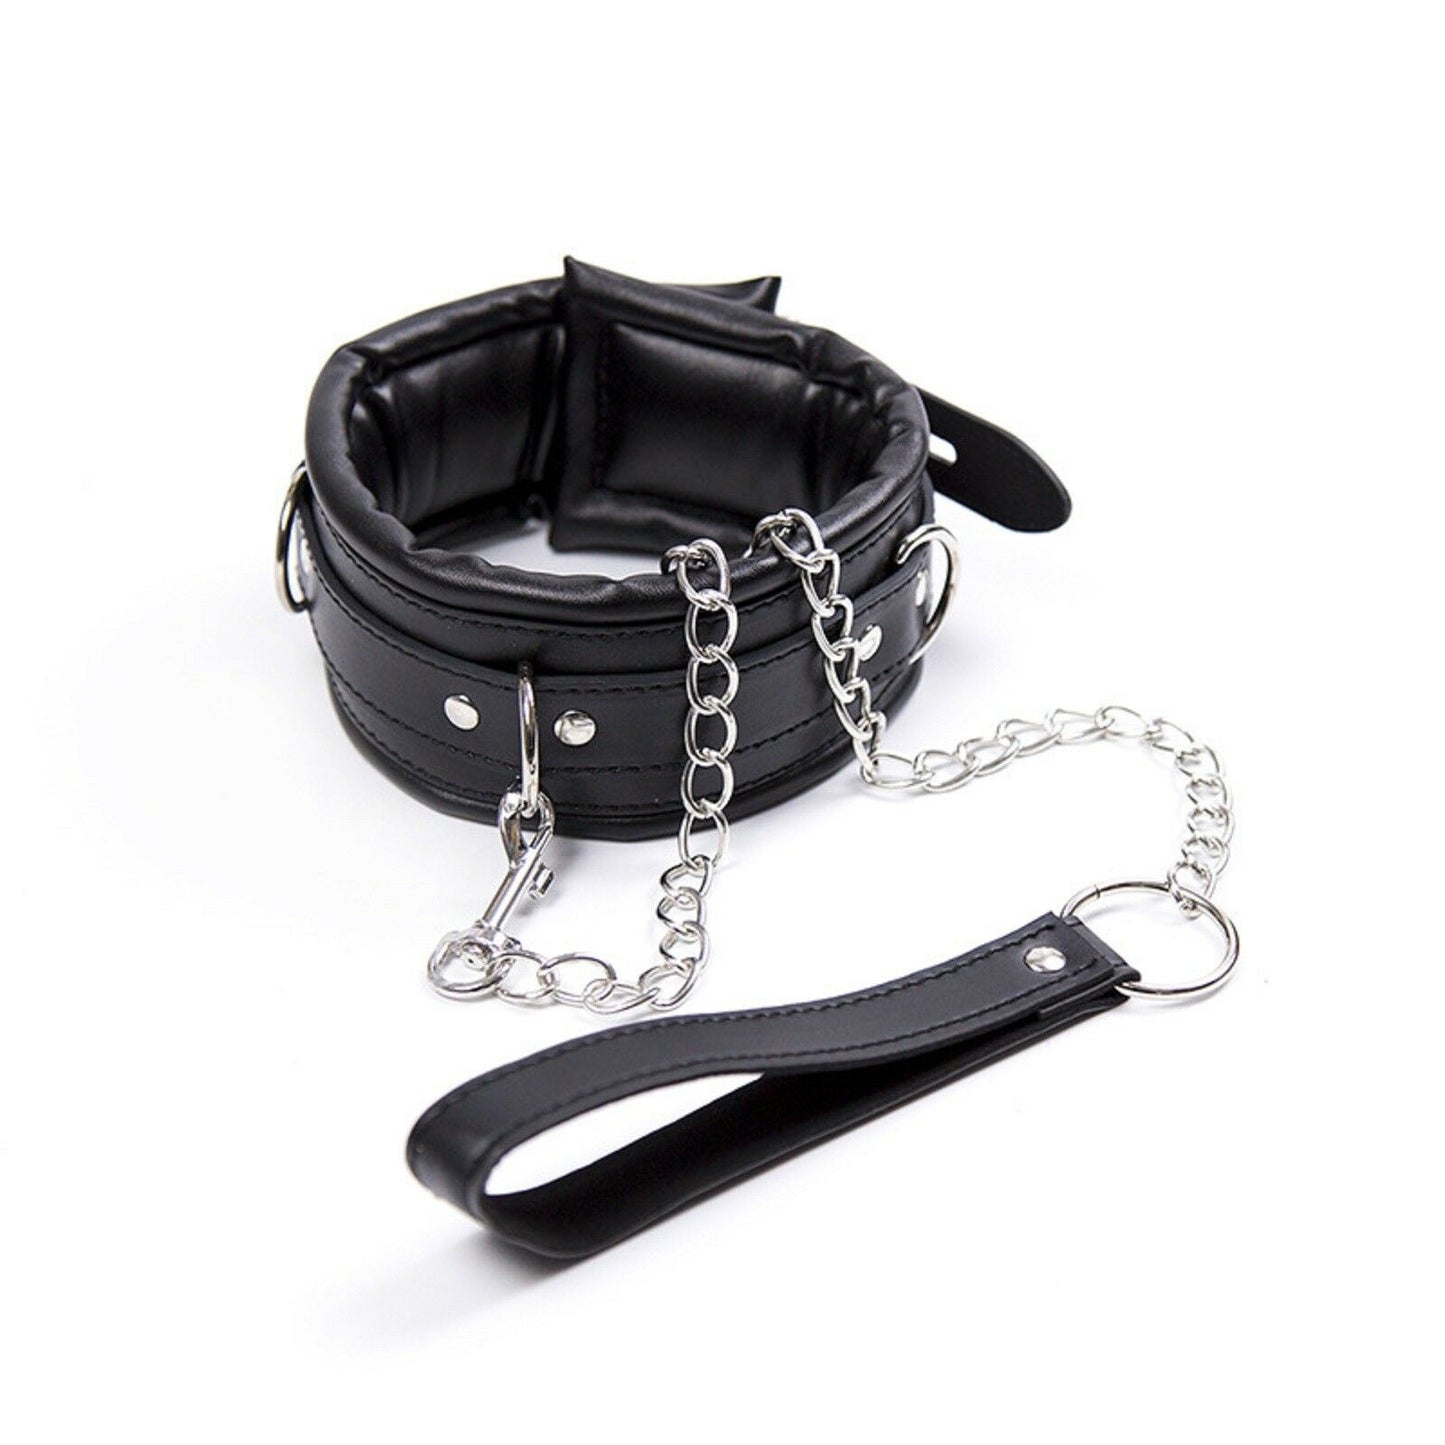 BDSM PU Leather Bondage Collar Leash Metal Chain Restraint Couple Adult/Sex Toy